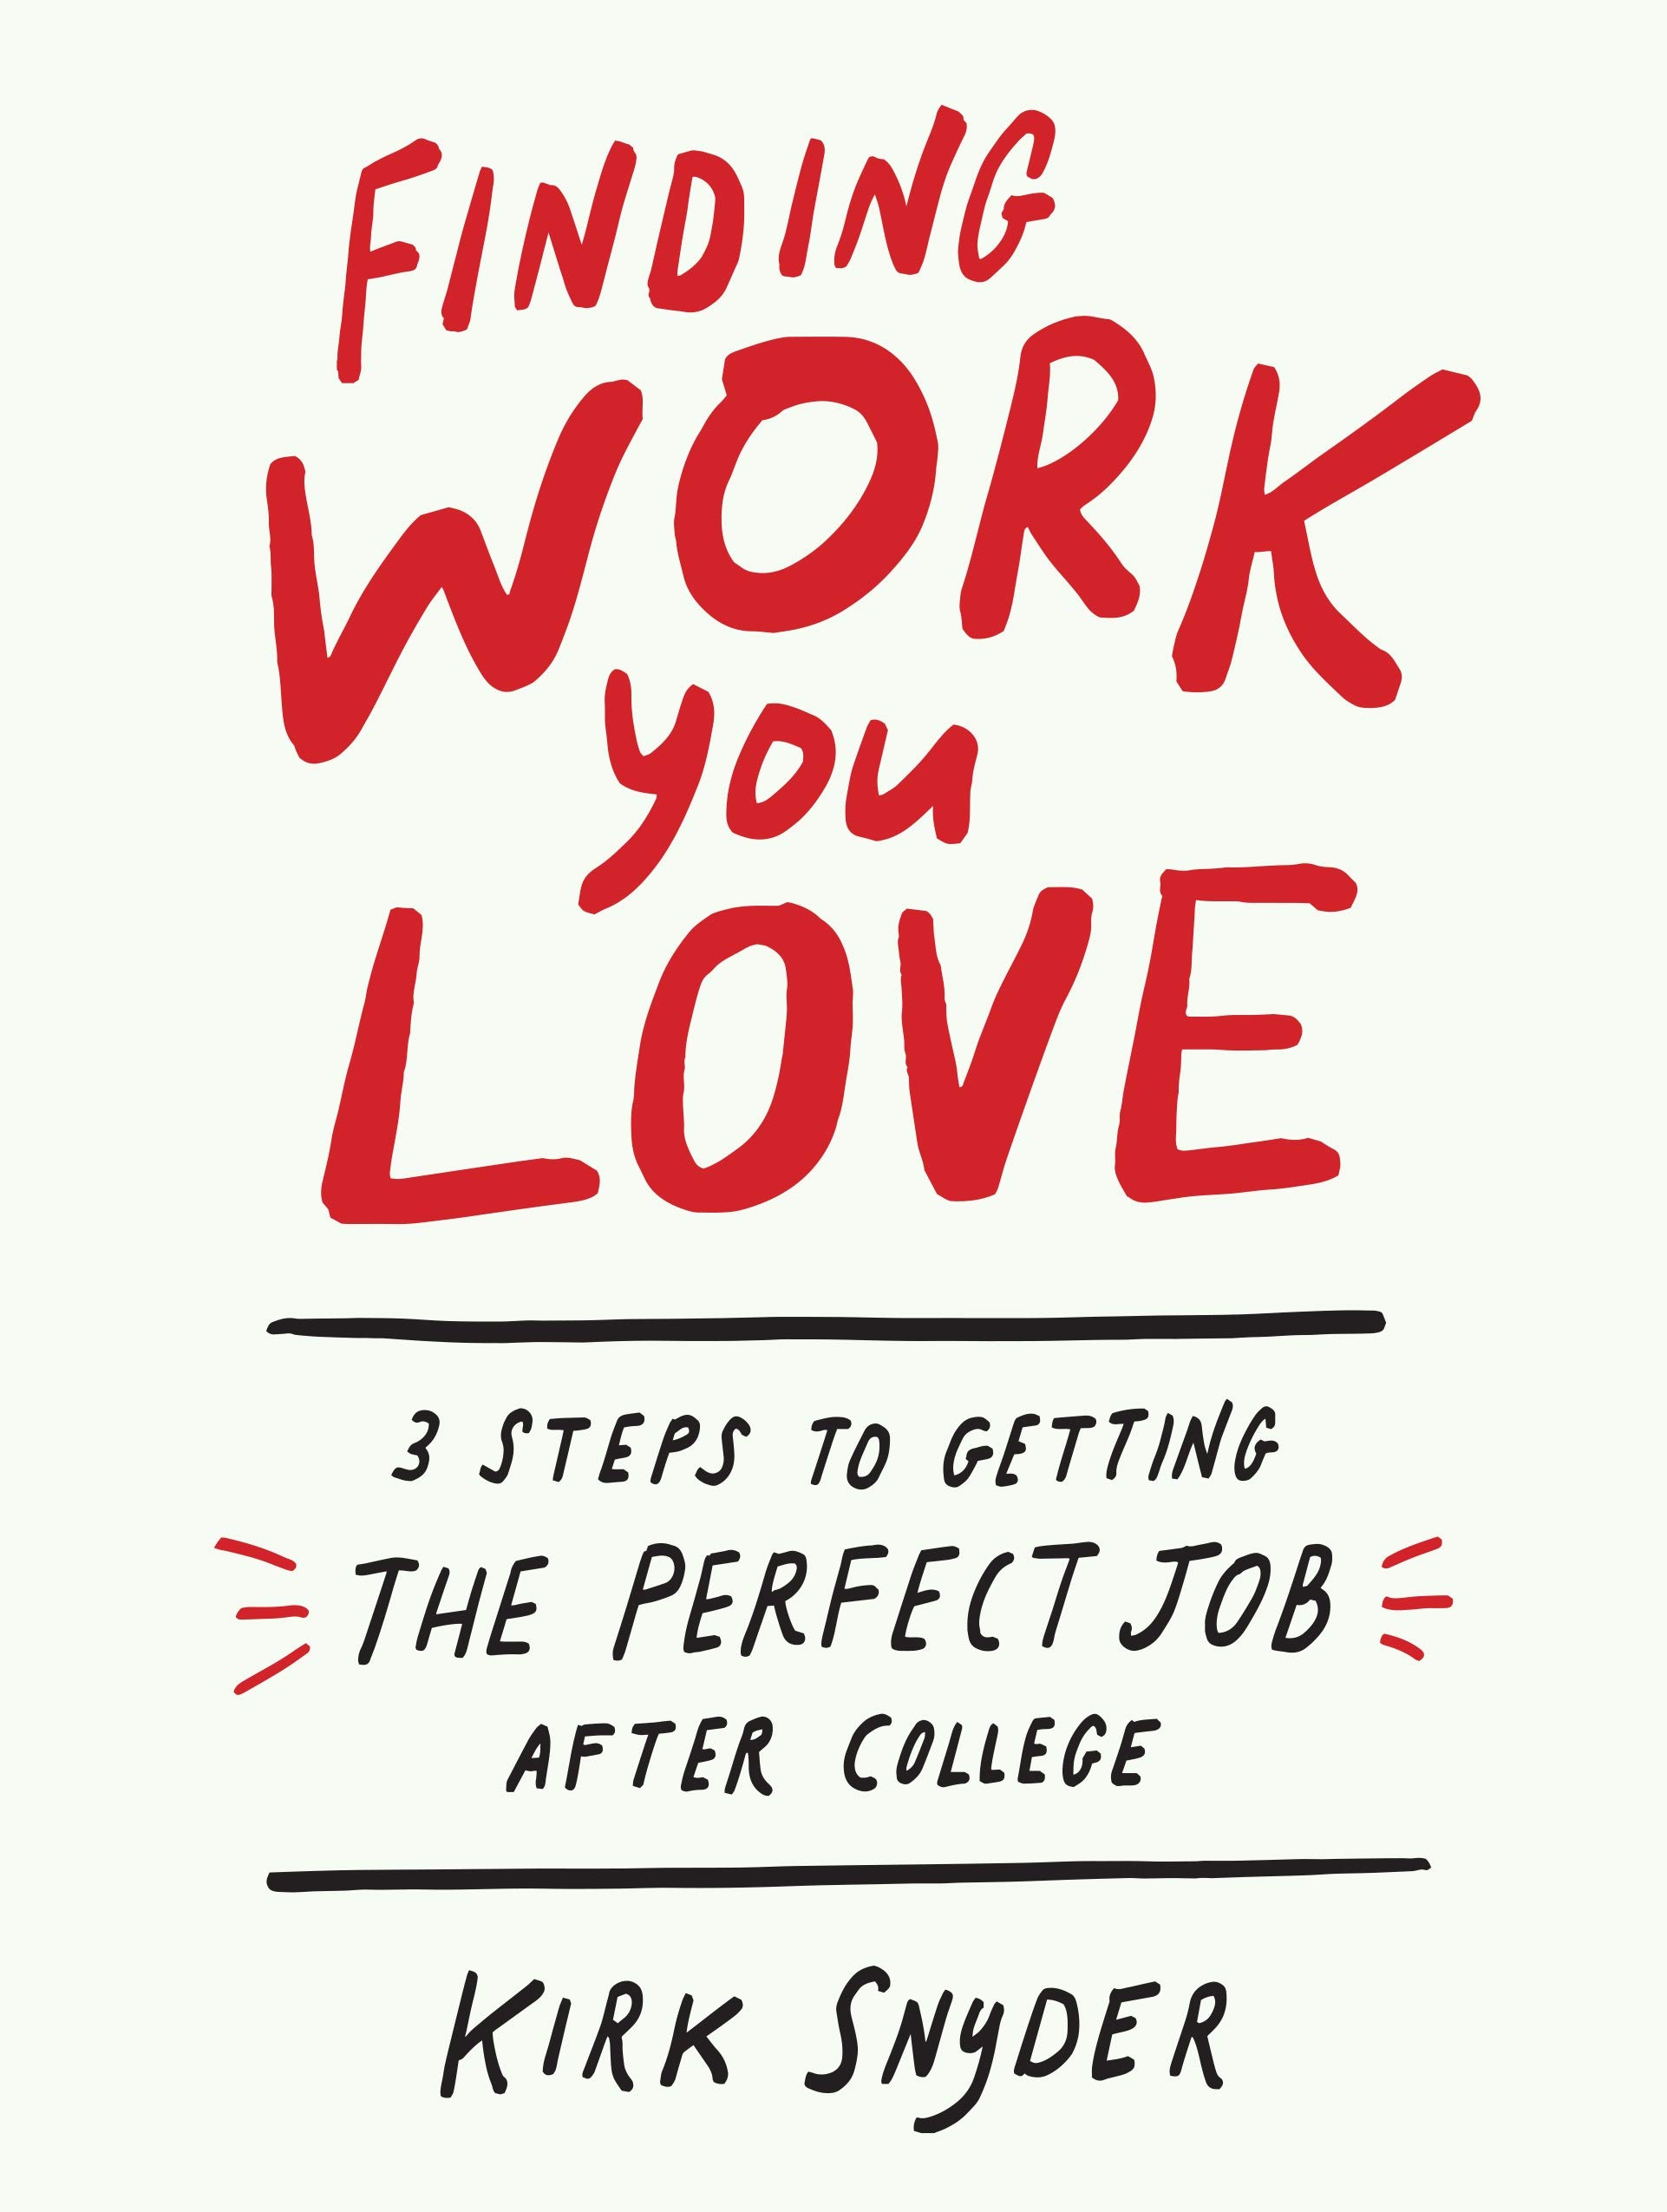 Finding Work You Love | Kirk Snyder image0